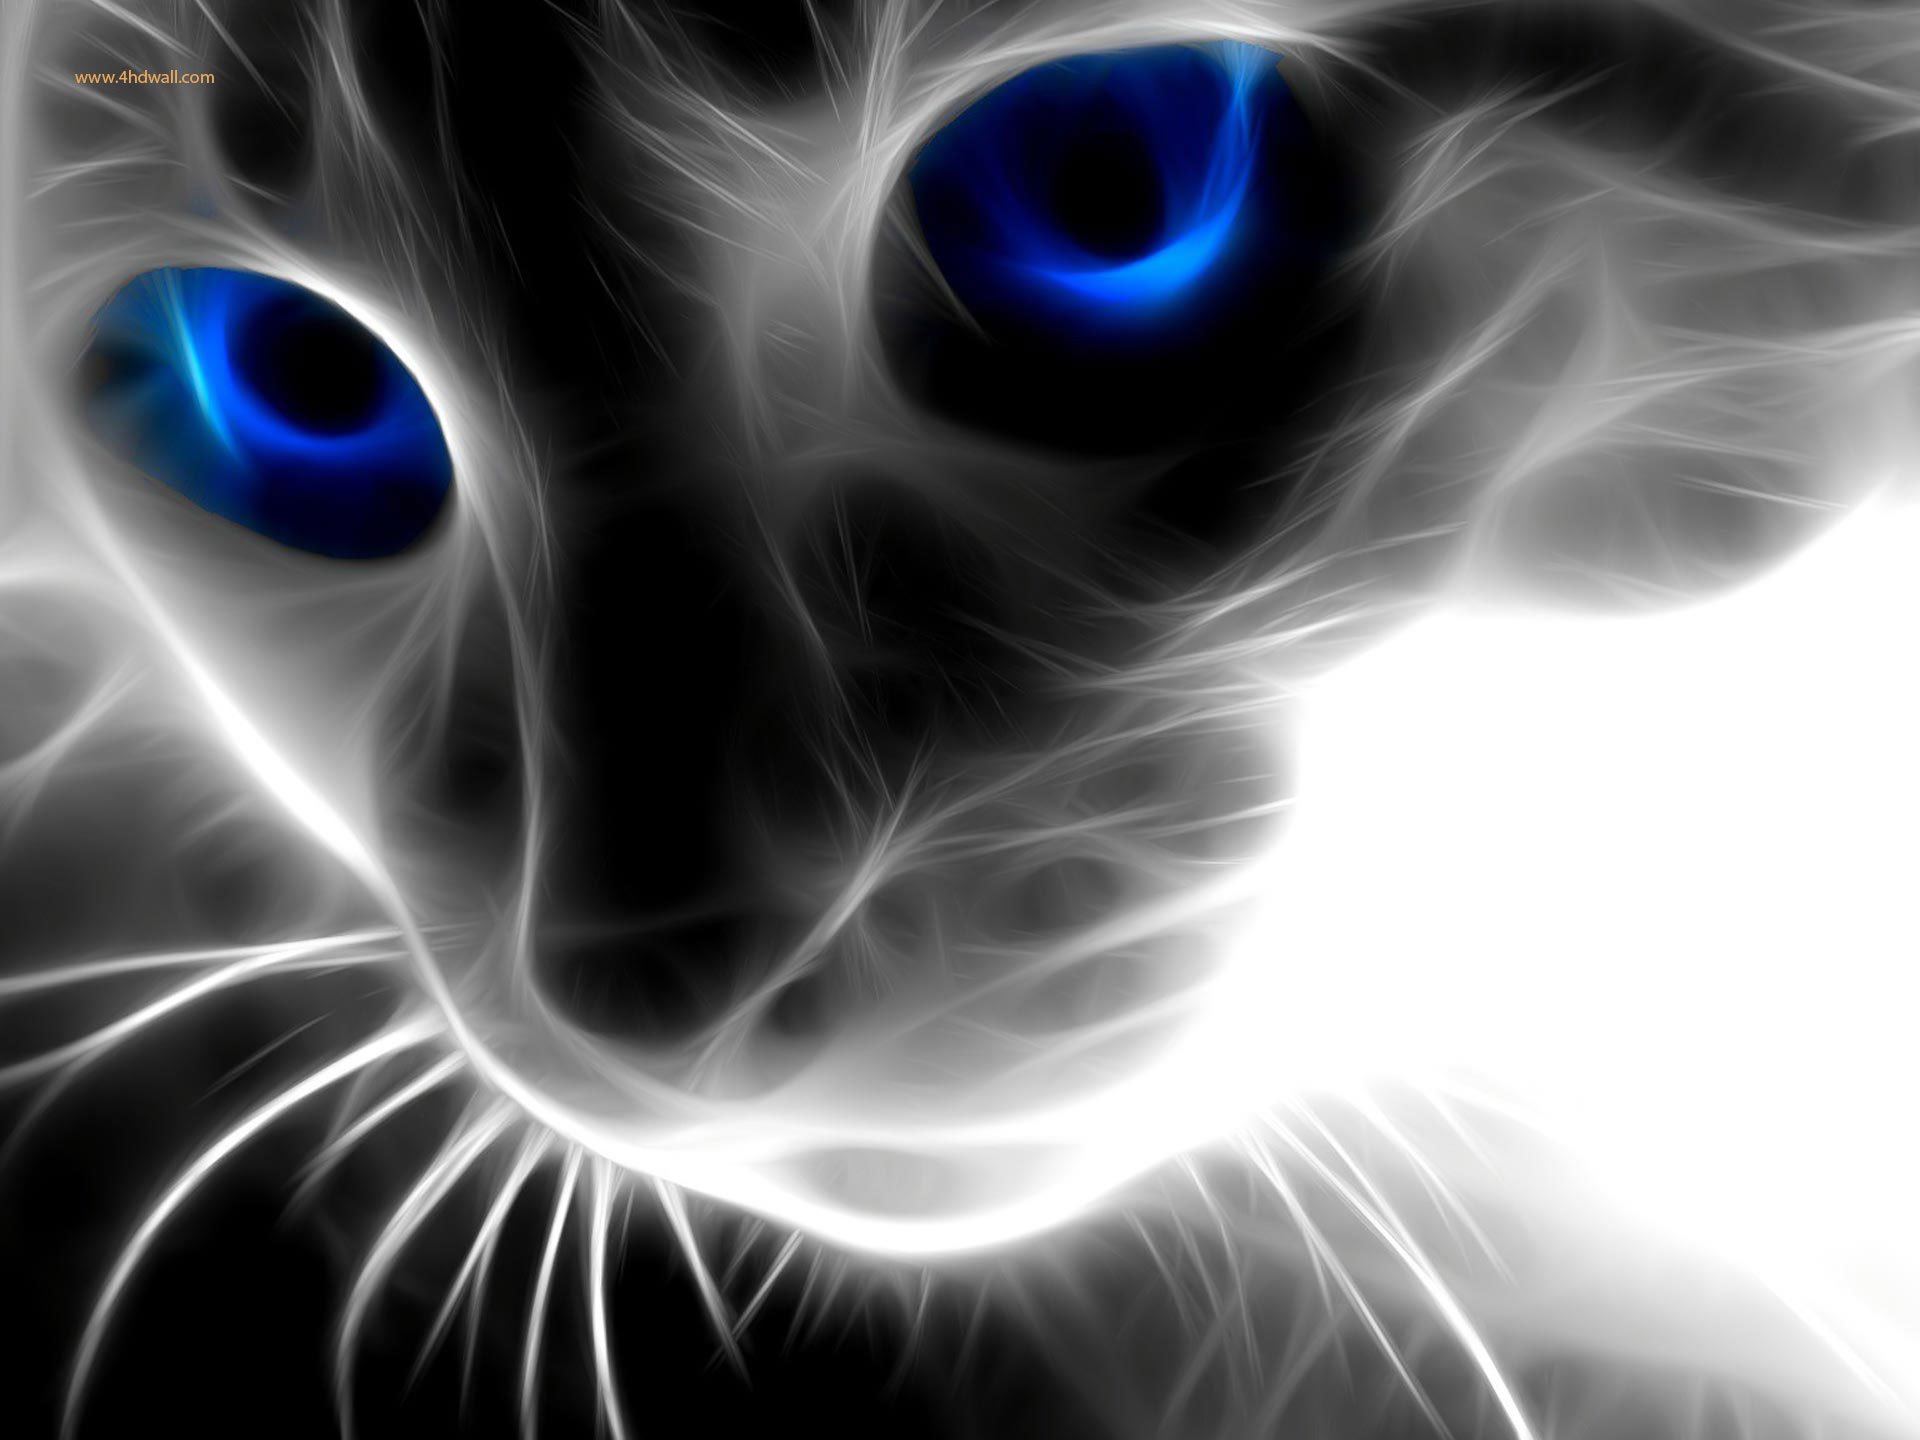 cat blue eyes wallpaper